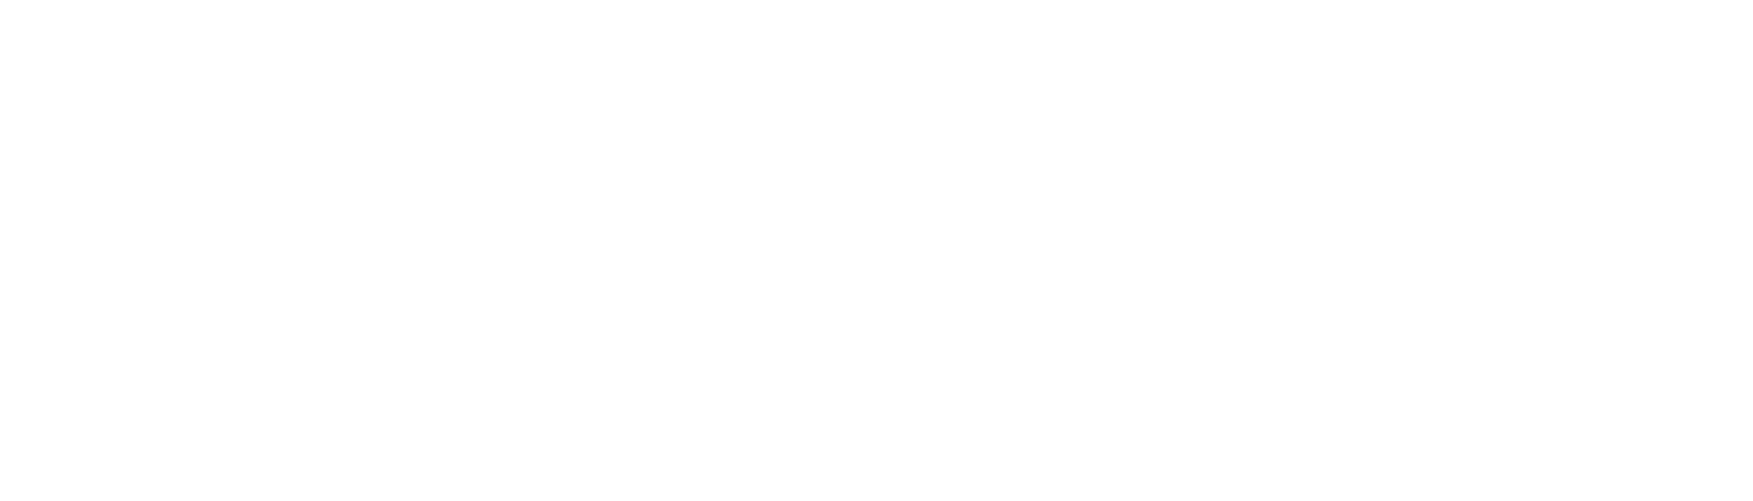 Papelera Suipacha